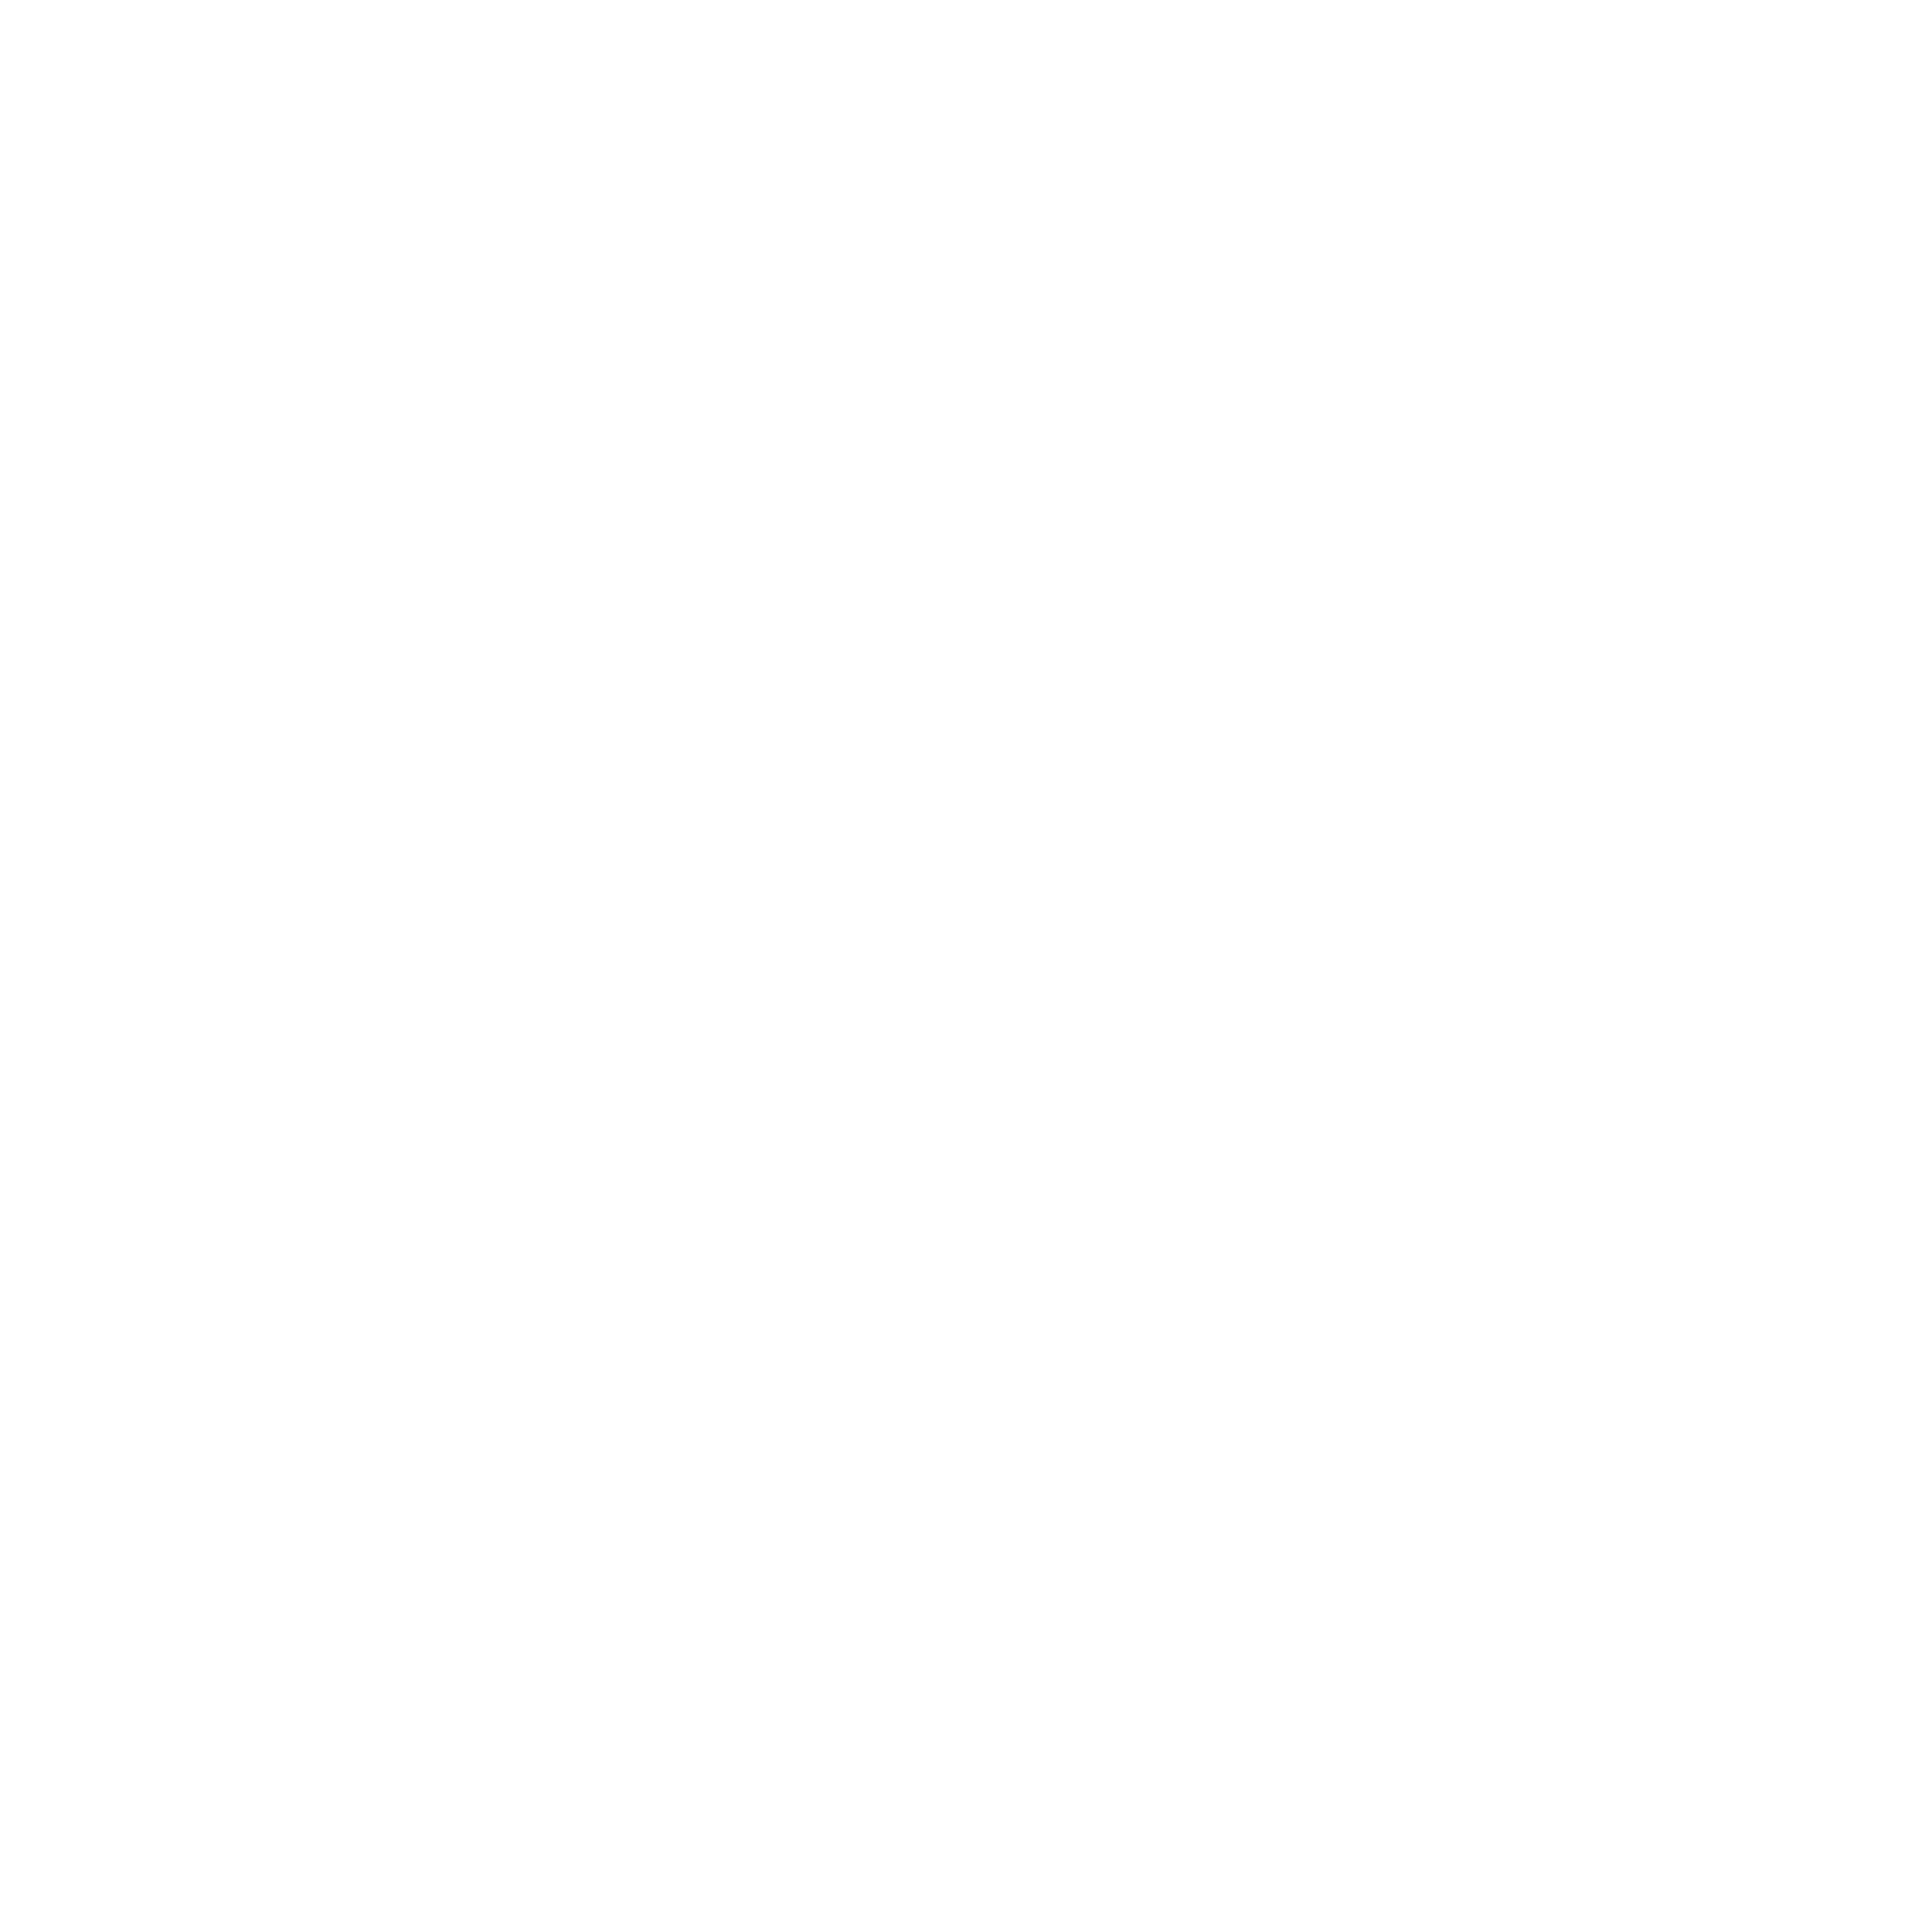 The Metallica Black Box